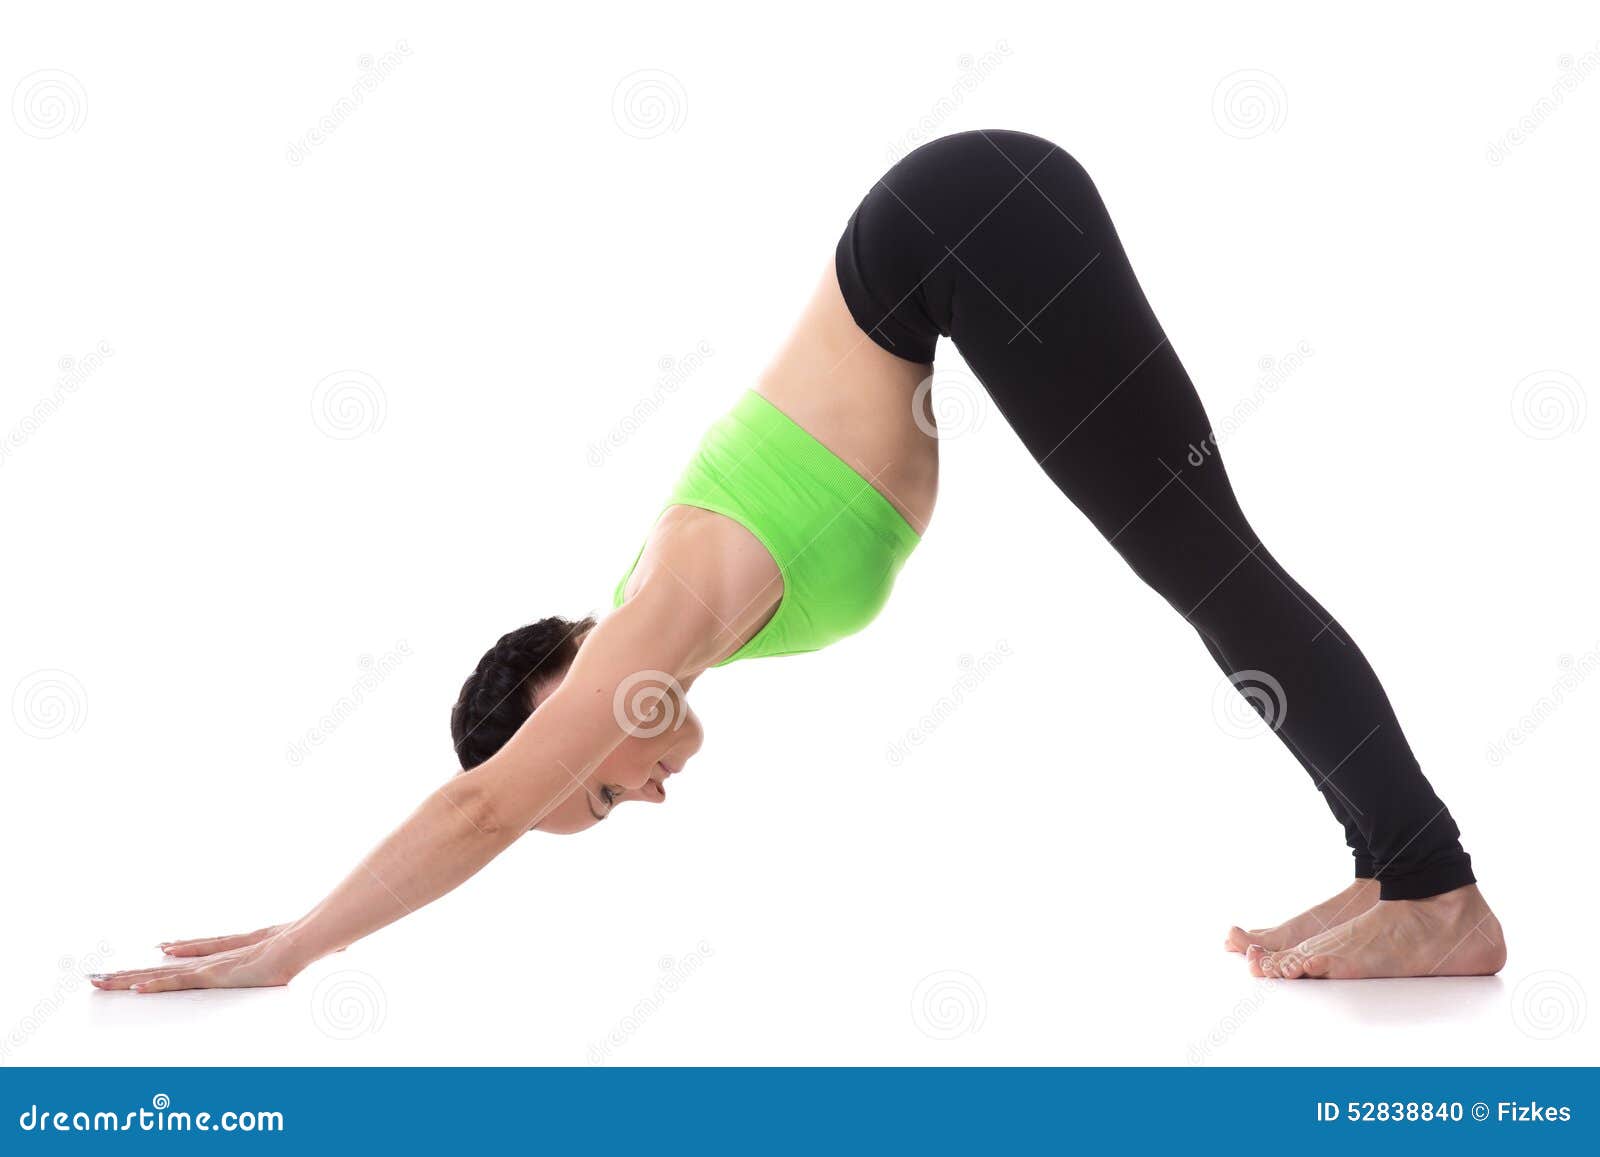 yoga pose downward-facing dog